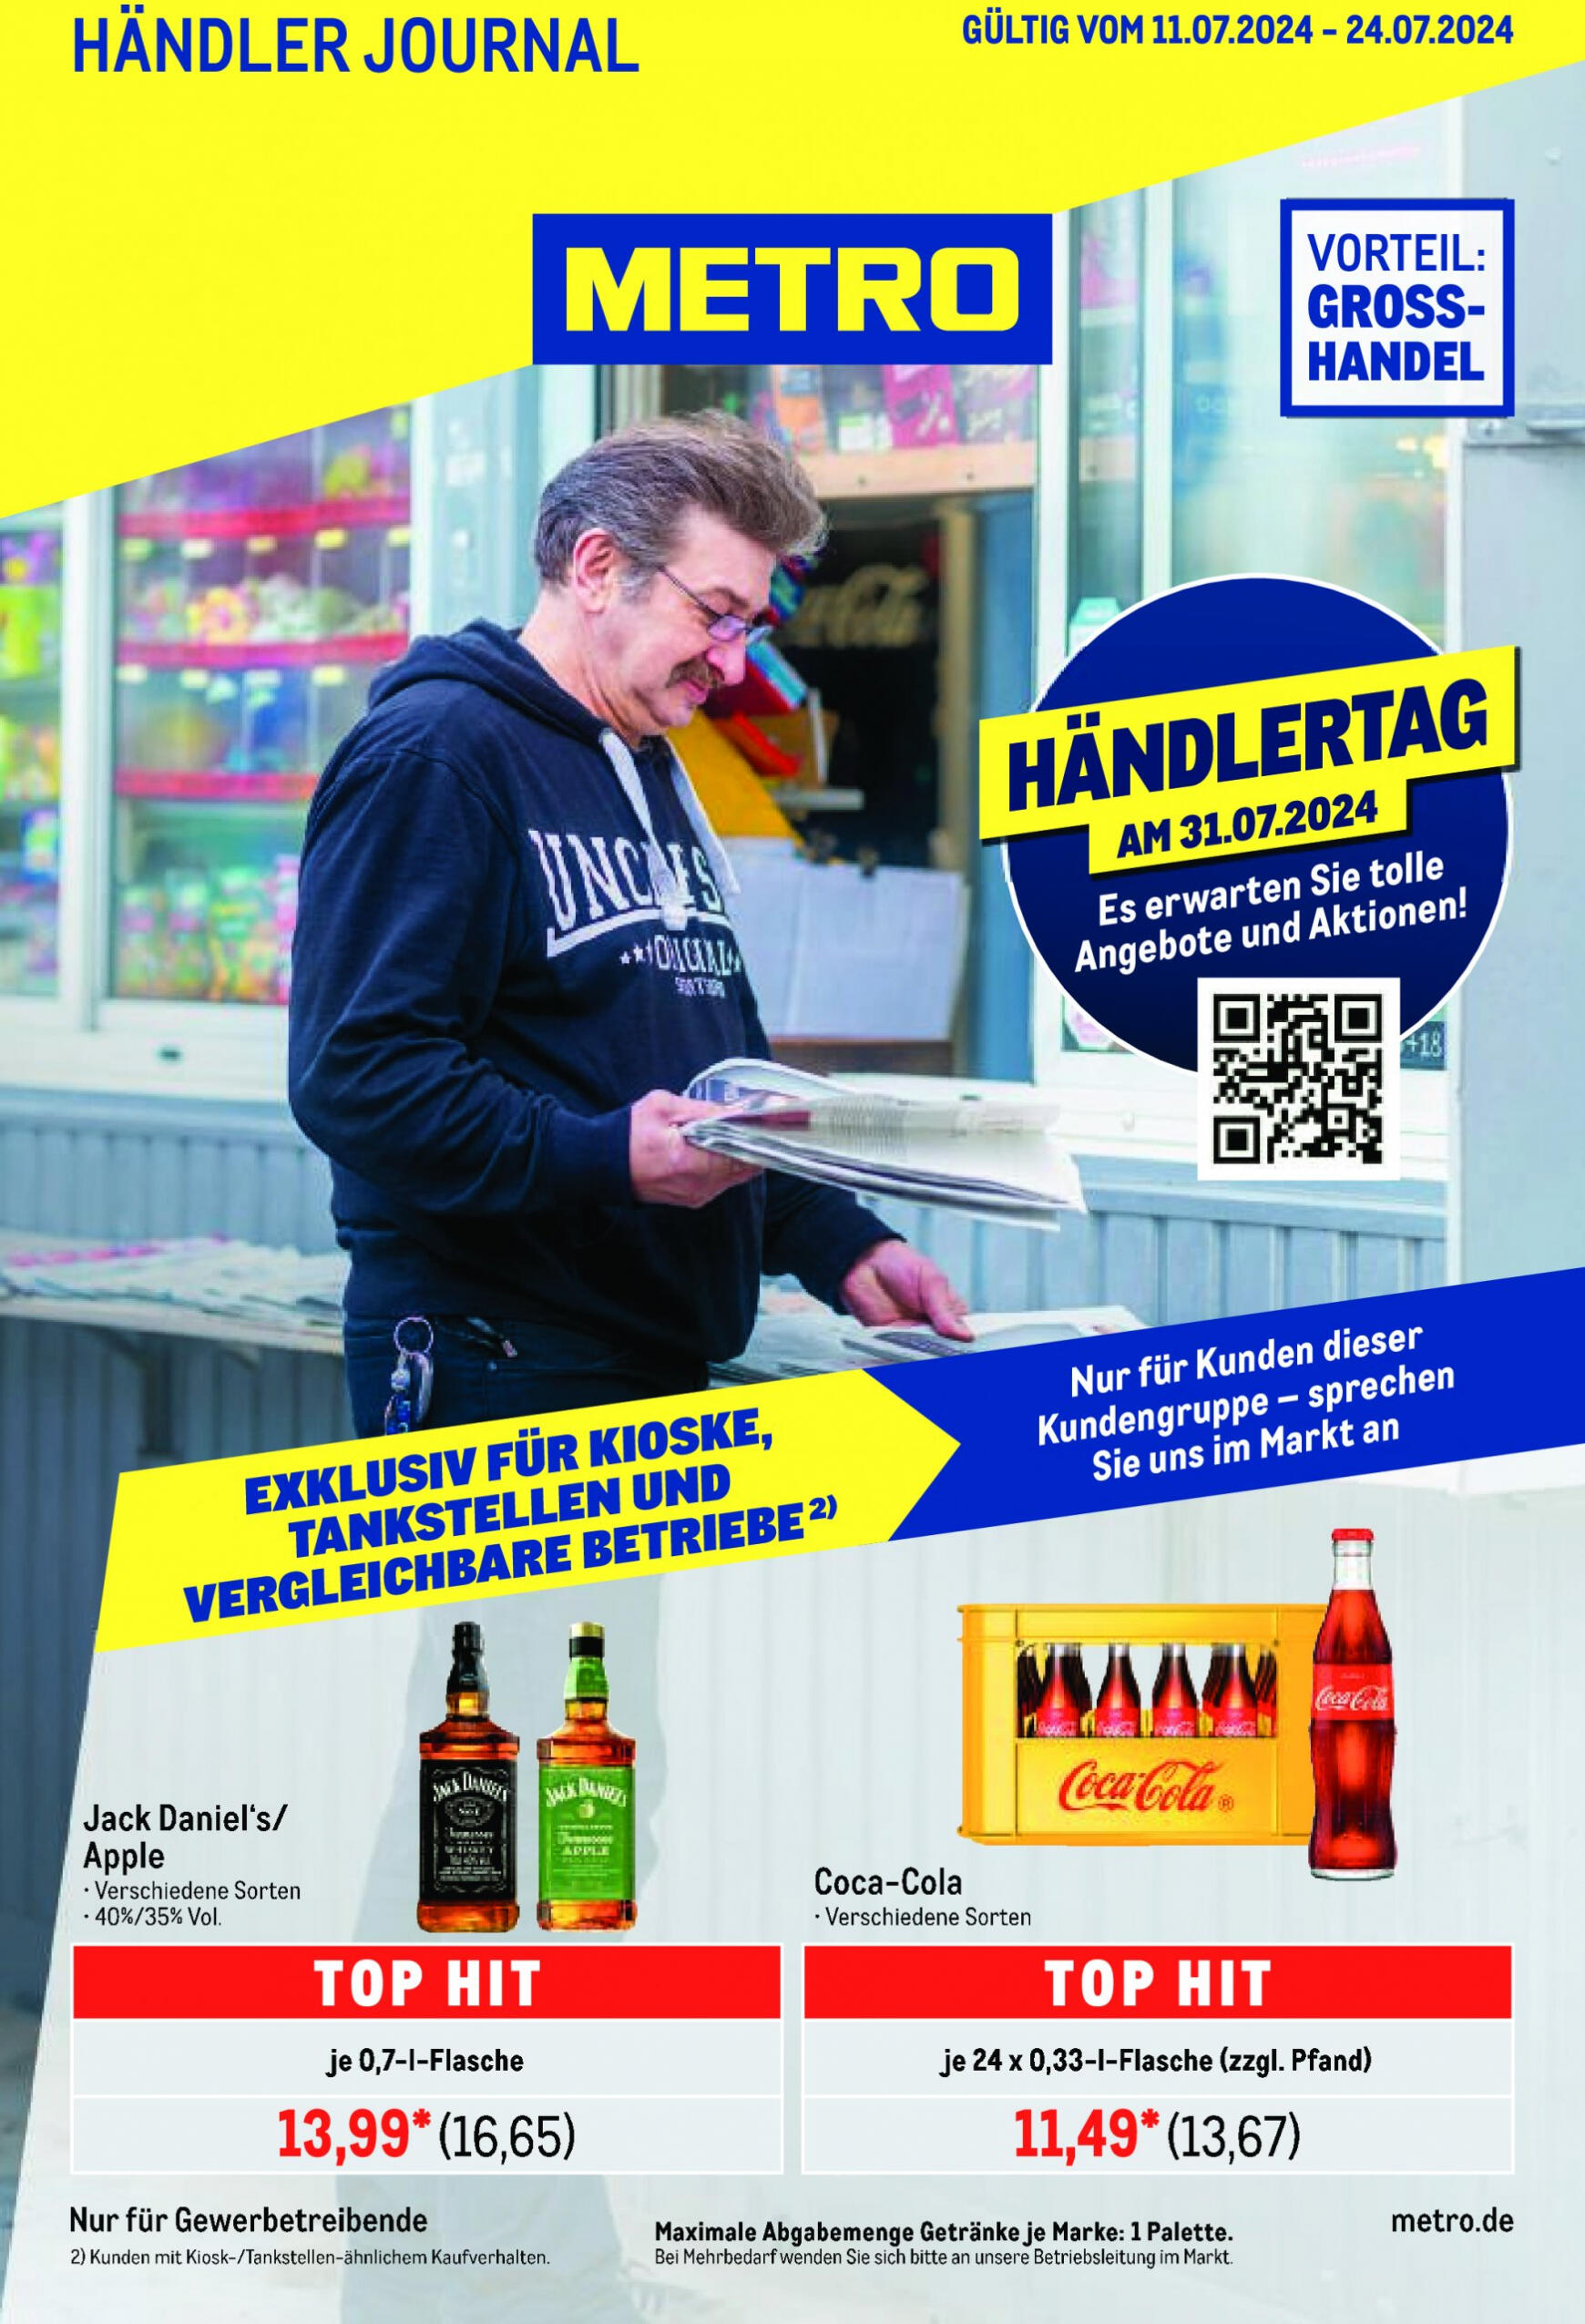 metro - Flyer Metro - Händler Journal aktuell 11.07. - 24.07.